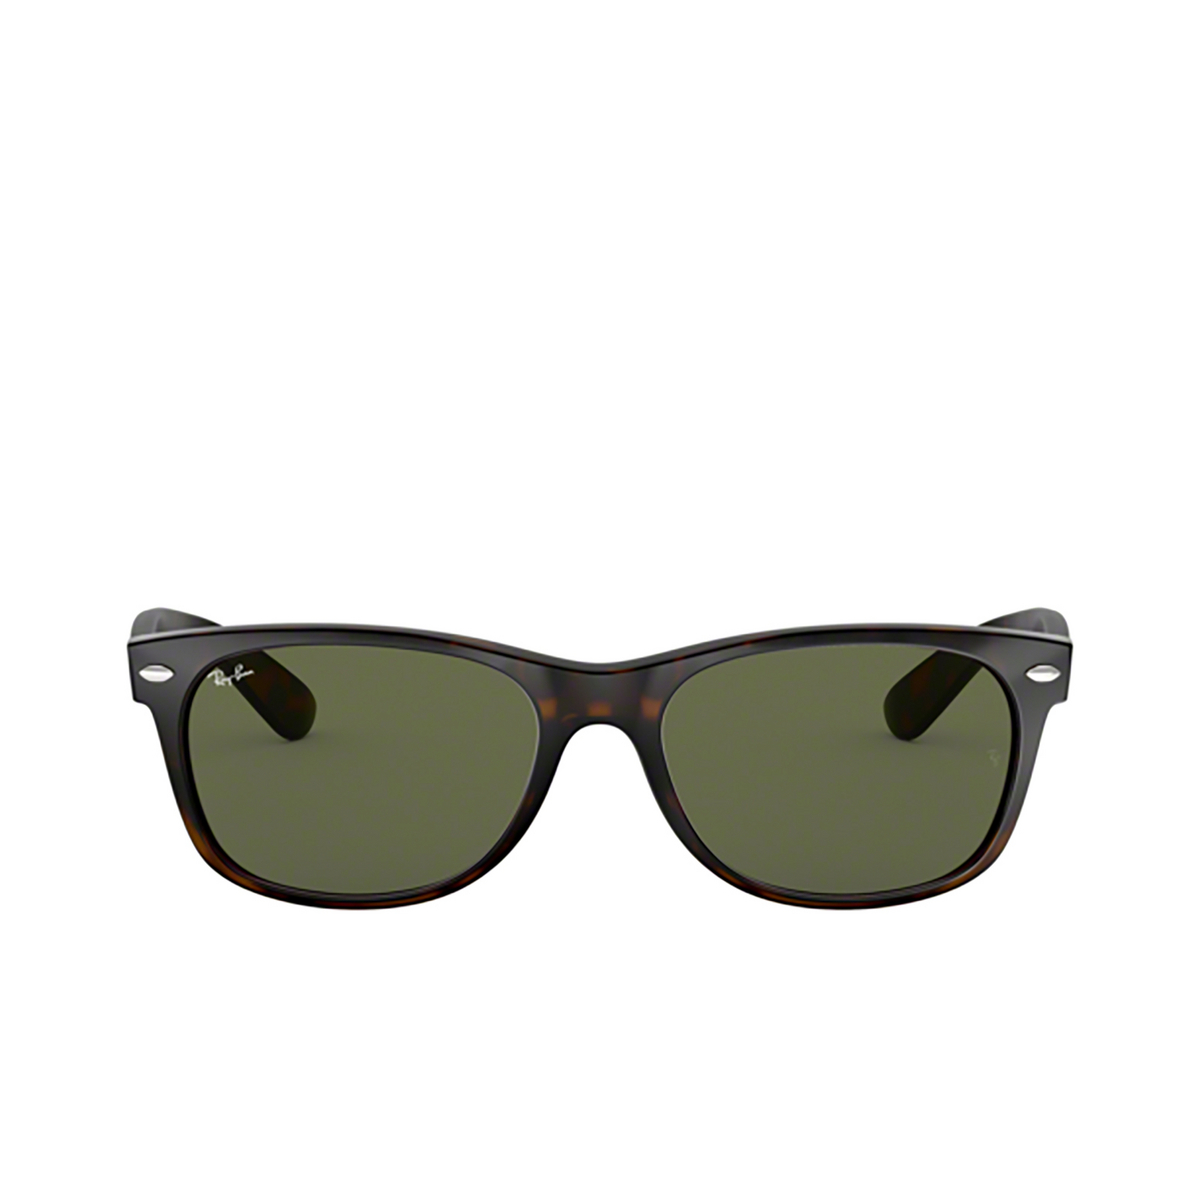 Ray-Ban NEW WAYFARER Sunglasses 902 TORTOISE - front view